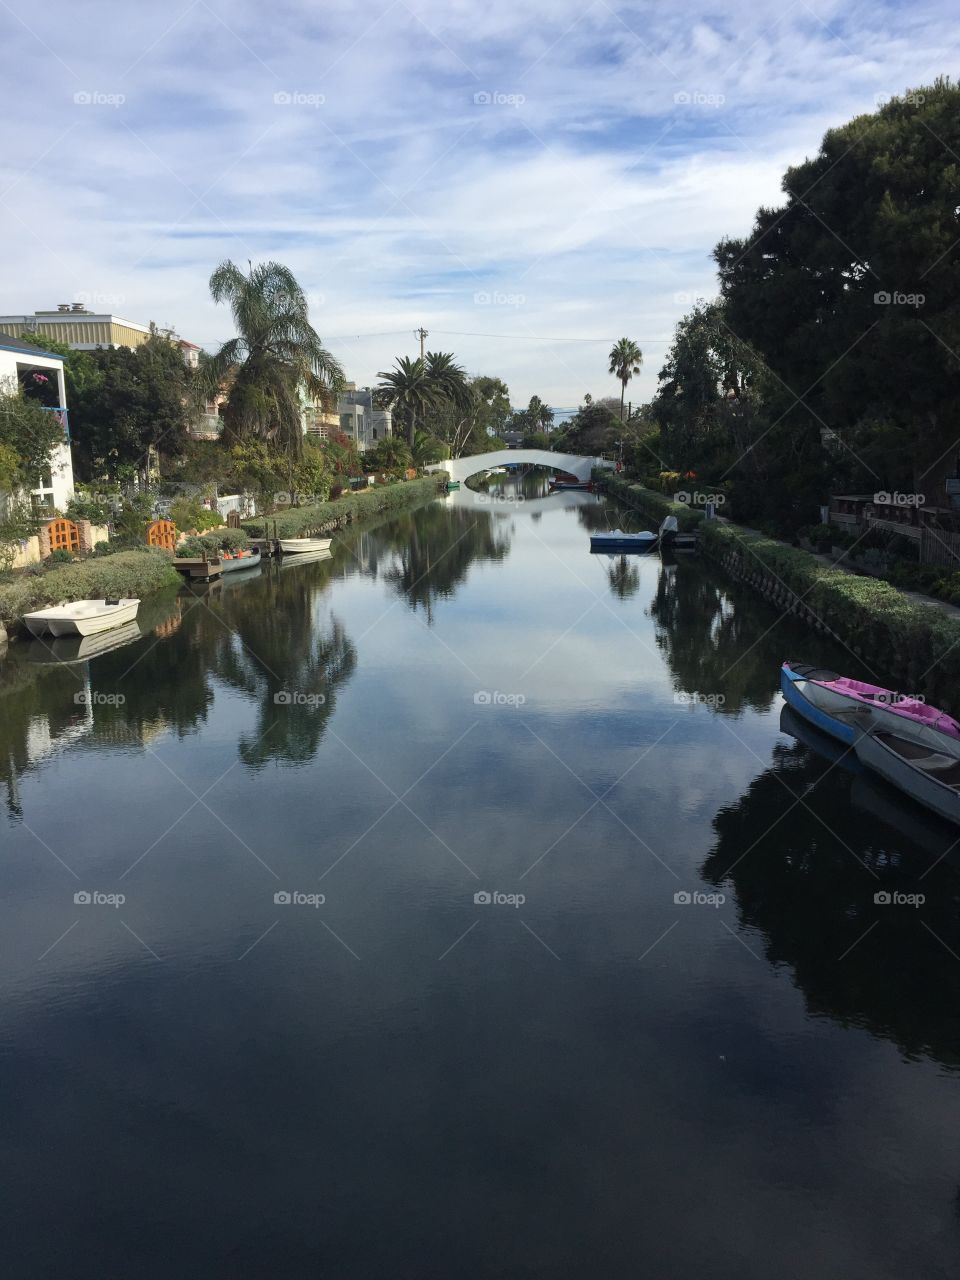 LA's version of canals 